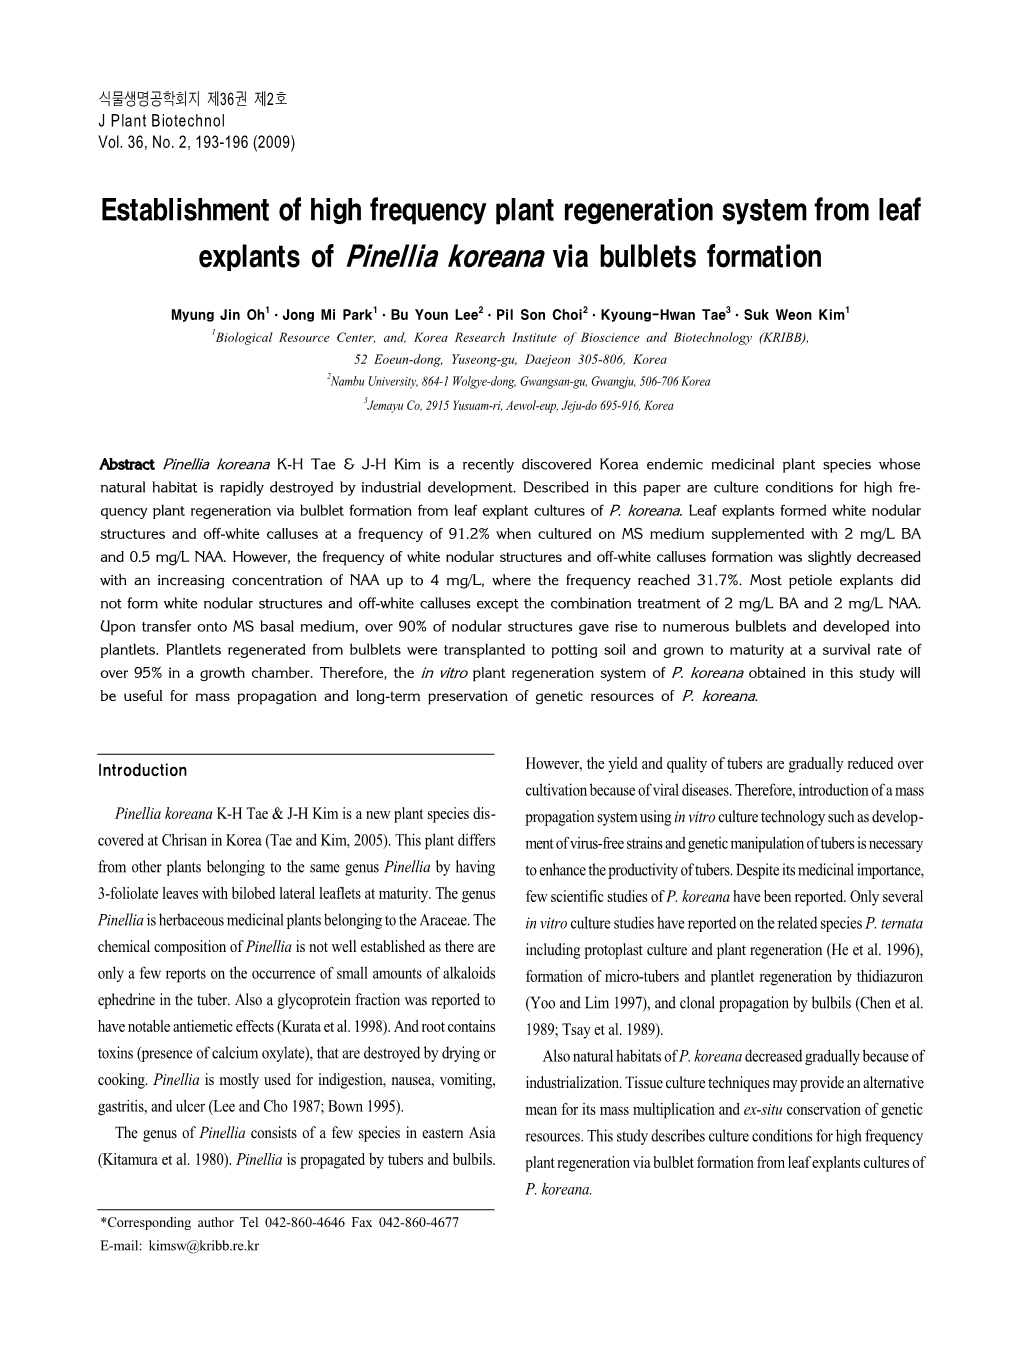 Establishment of High Frequency Plant Regeneration System from Leaf Explants of Pinellia Koreana Via Bulblets Formation